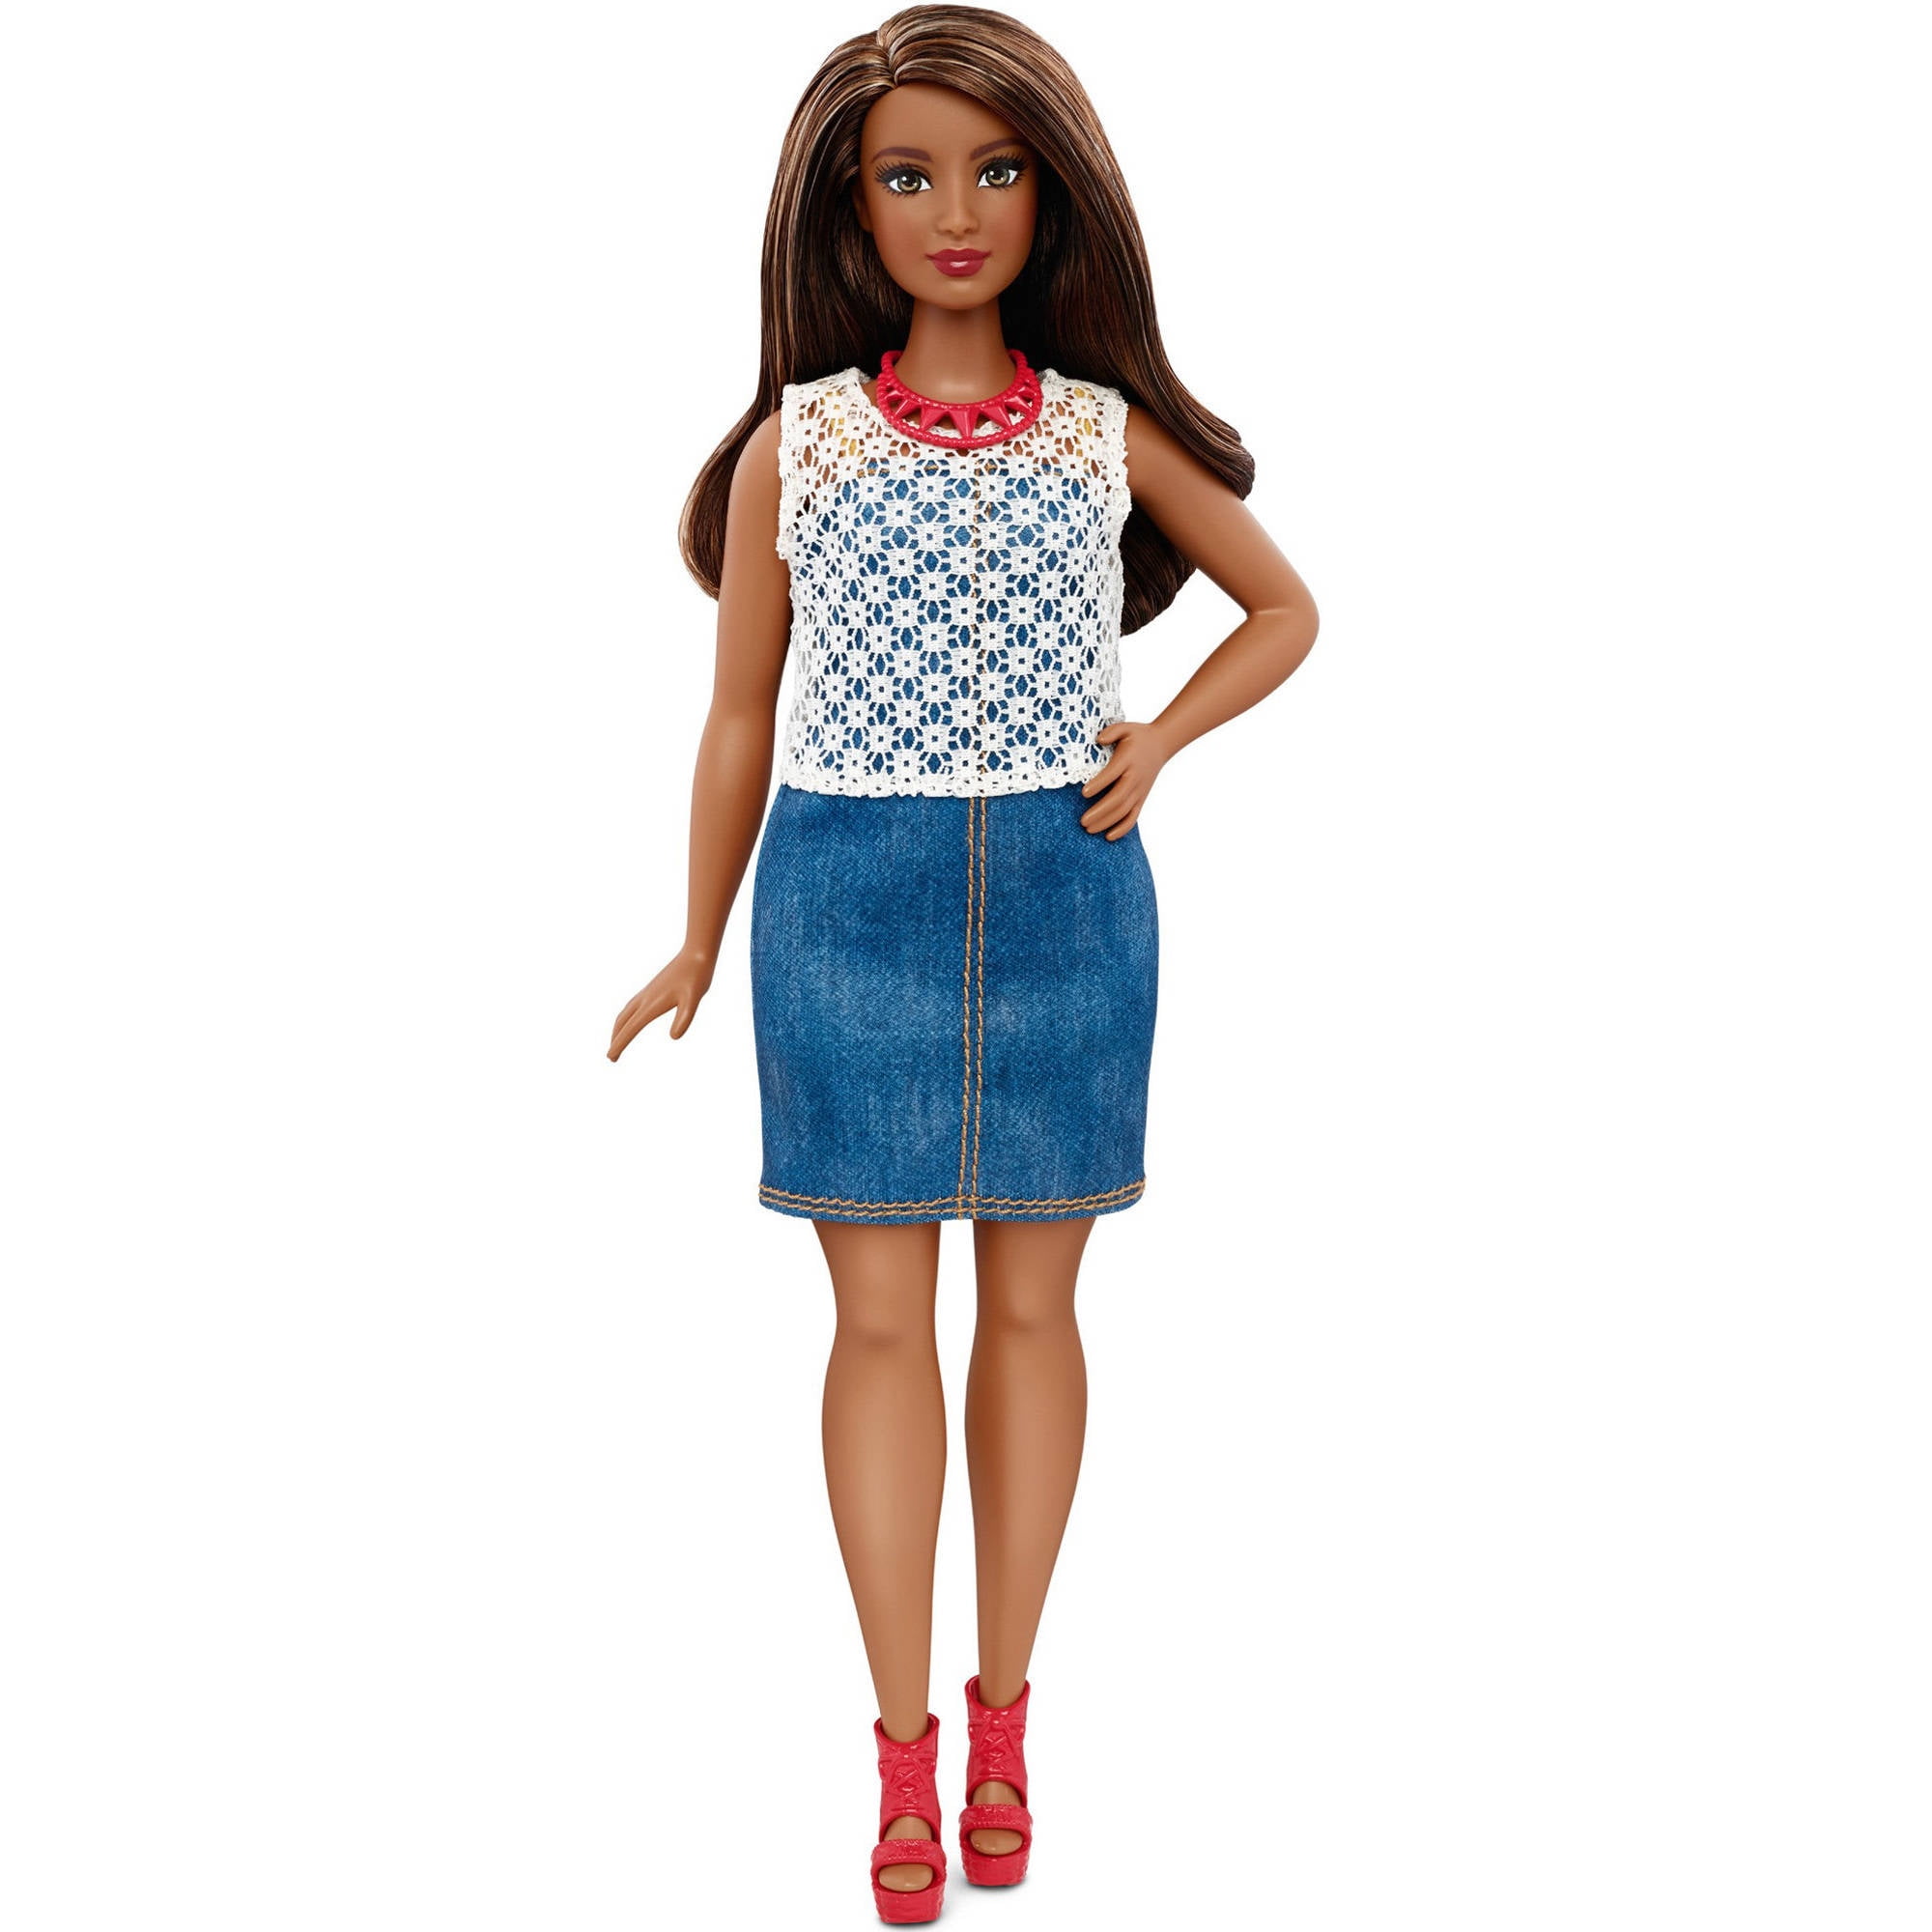 Barbie Fashionistas Denim Bodice Dress Outfit Fashion ONLY NO DOLL 